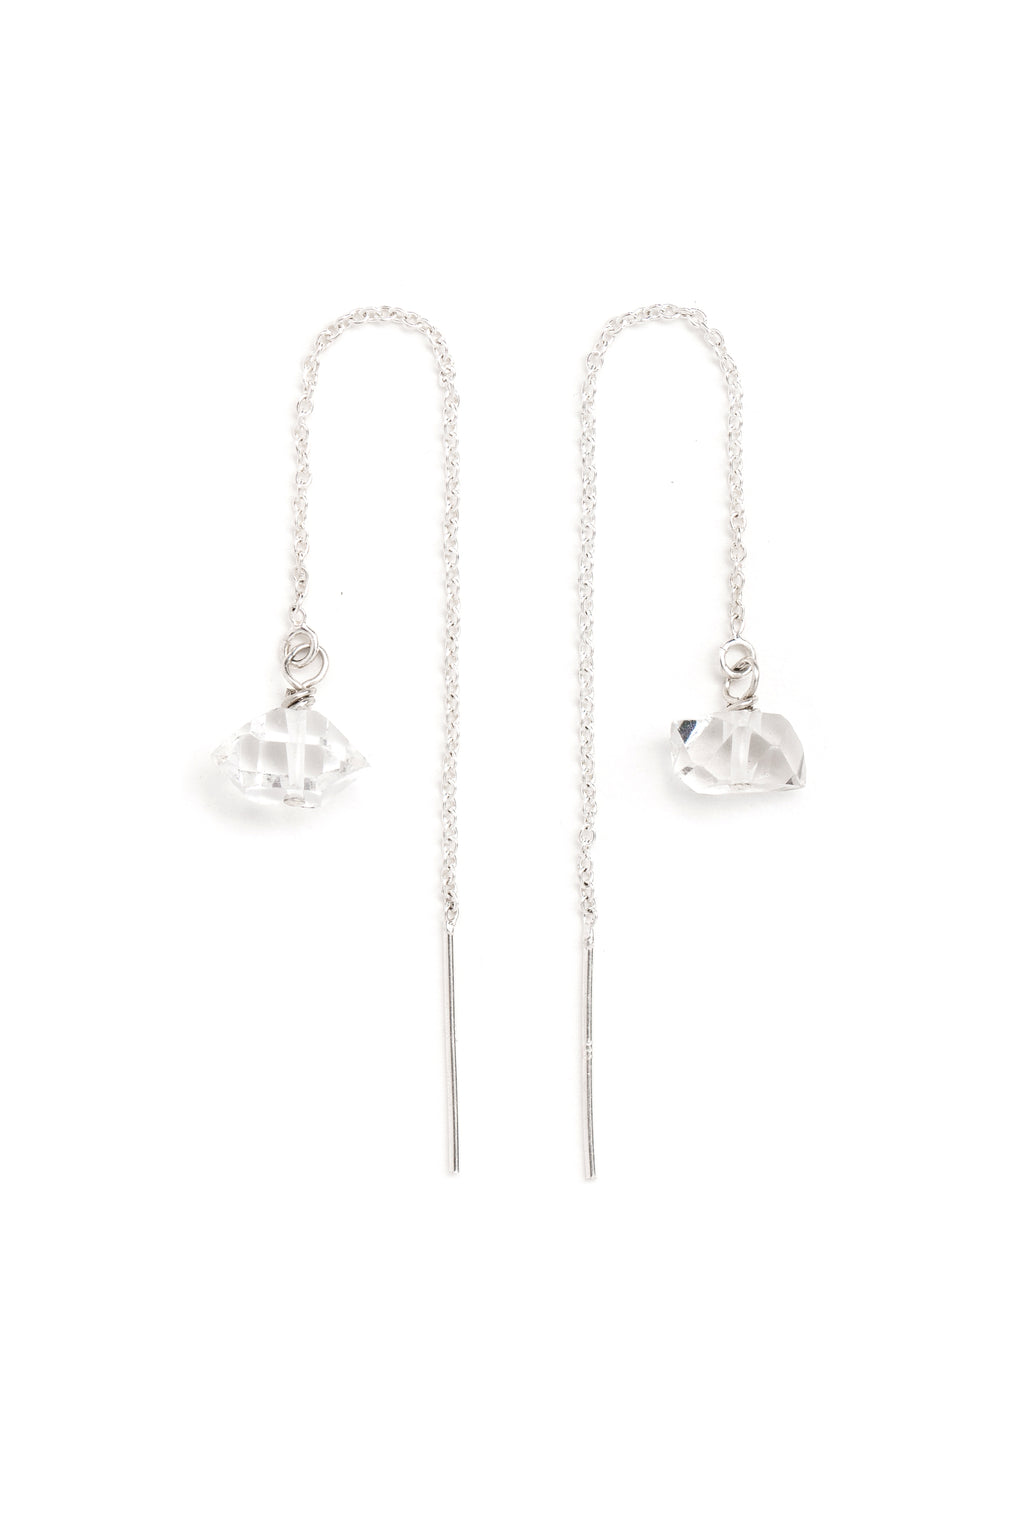 Herkimer Diamond Ear Threads on Silver Chains